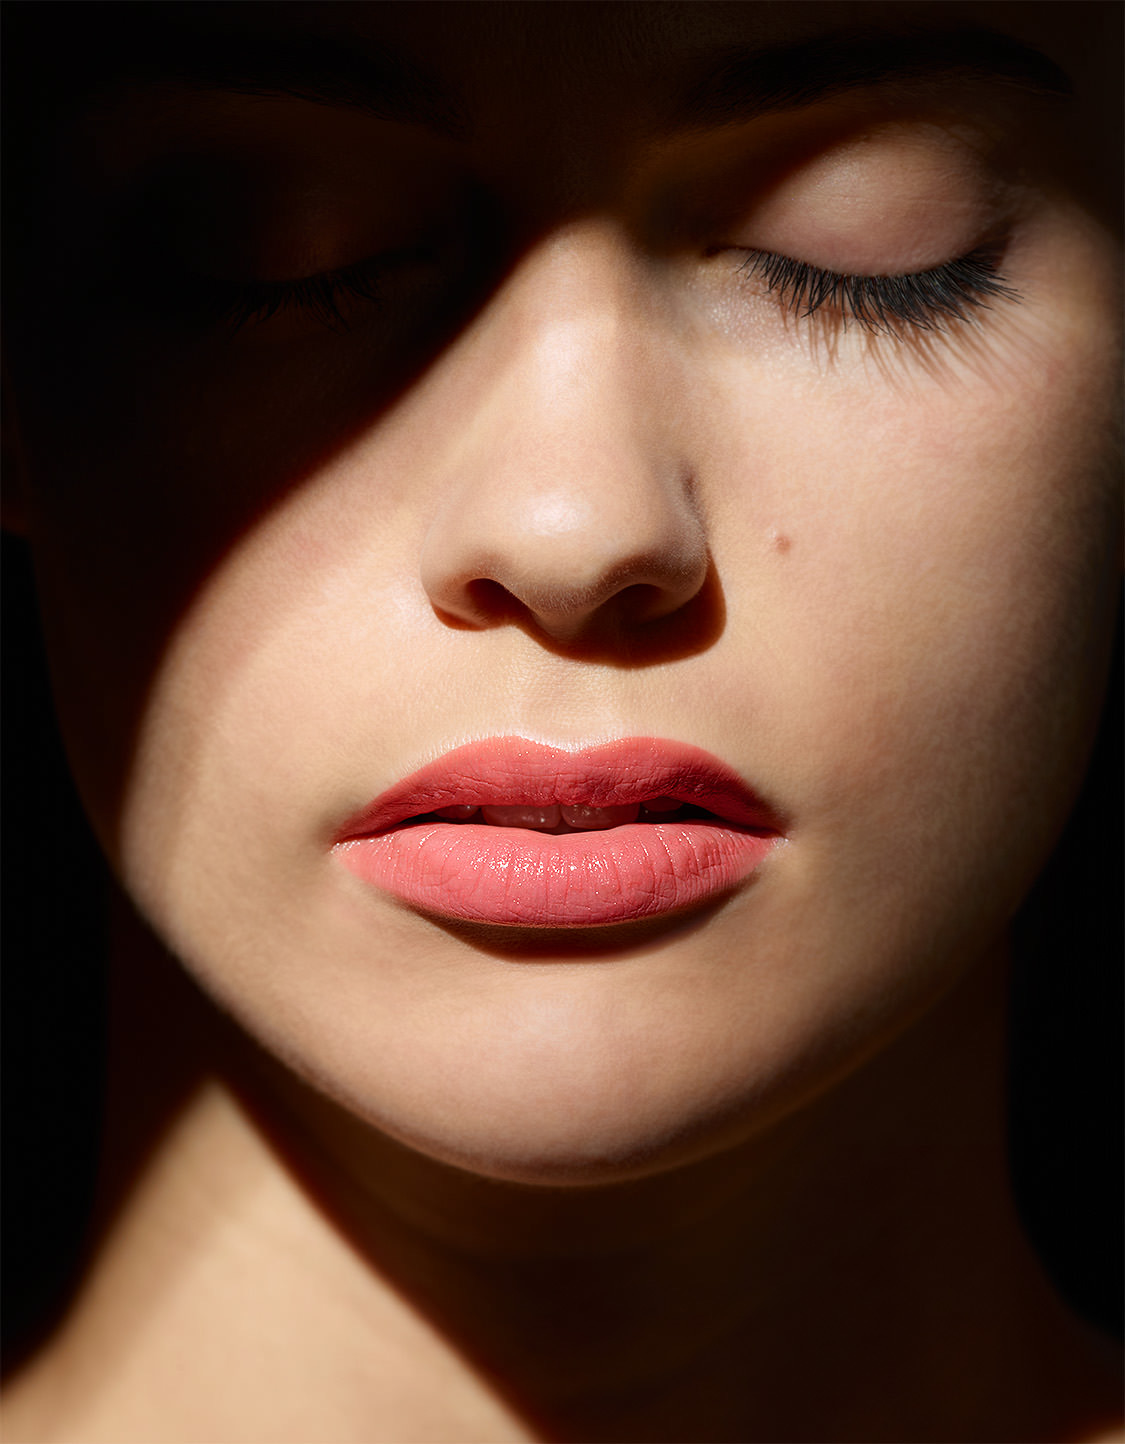 Eye Macro CloseUp for LOV cosmetics  - Marc Wuchner - Beauty Still Life Cosmetic and Texture Photographer, Frankfurt